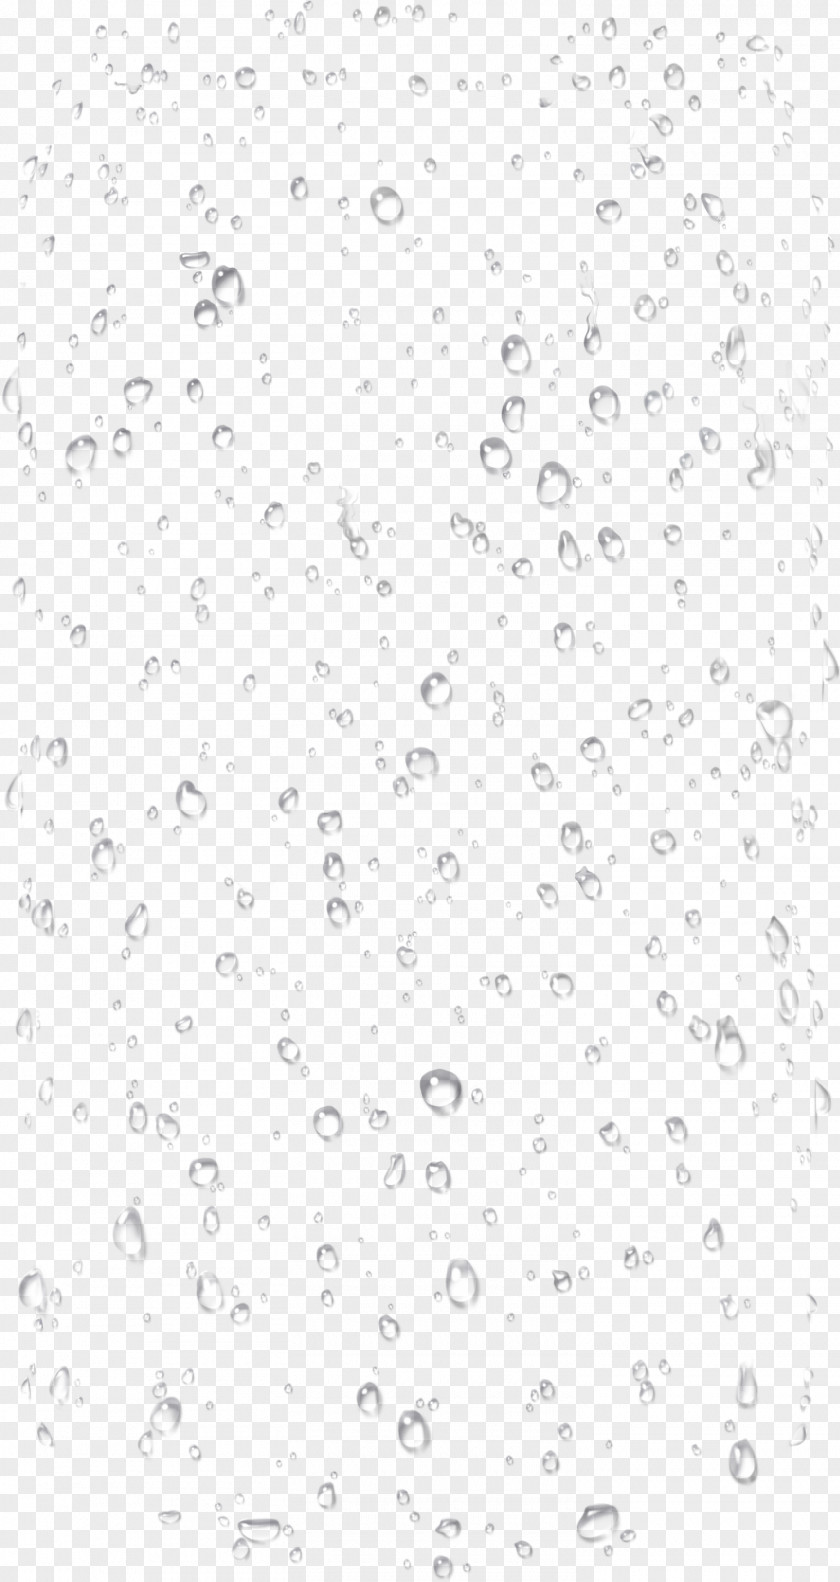 Drops Drop Water Aerosol Spray PNG